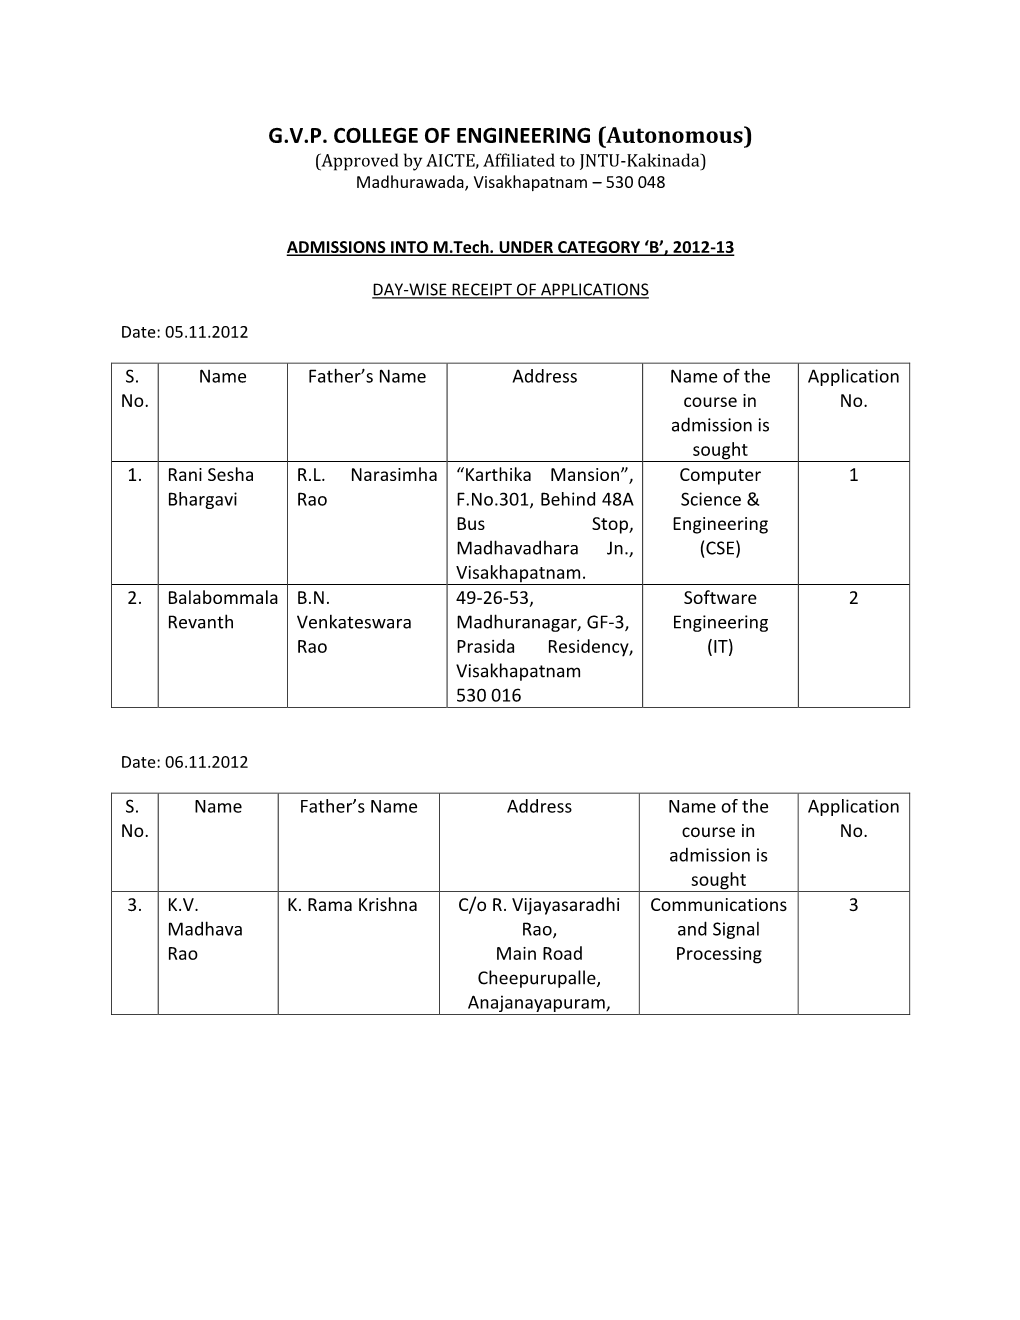 G.V.P. COLLEGE of ENGINEERING (Autonomous) (Approved by AICTE, Affiliated to JNTU-Kakinada) Madhurawada, Visakhapatnam – 530 048